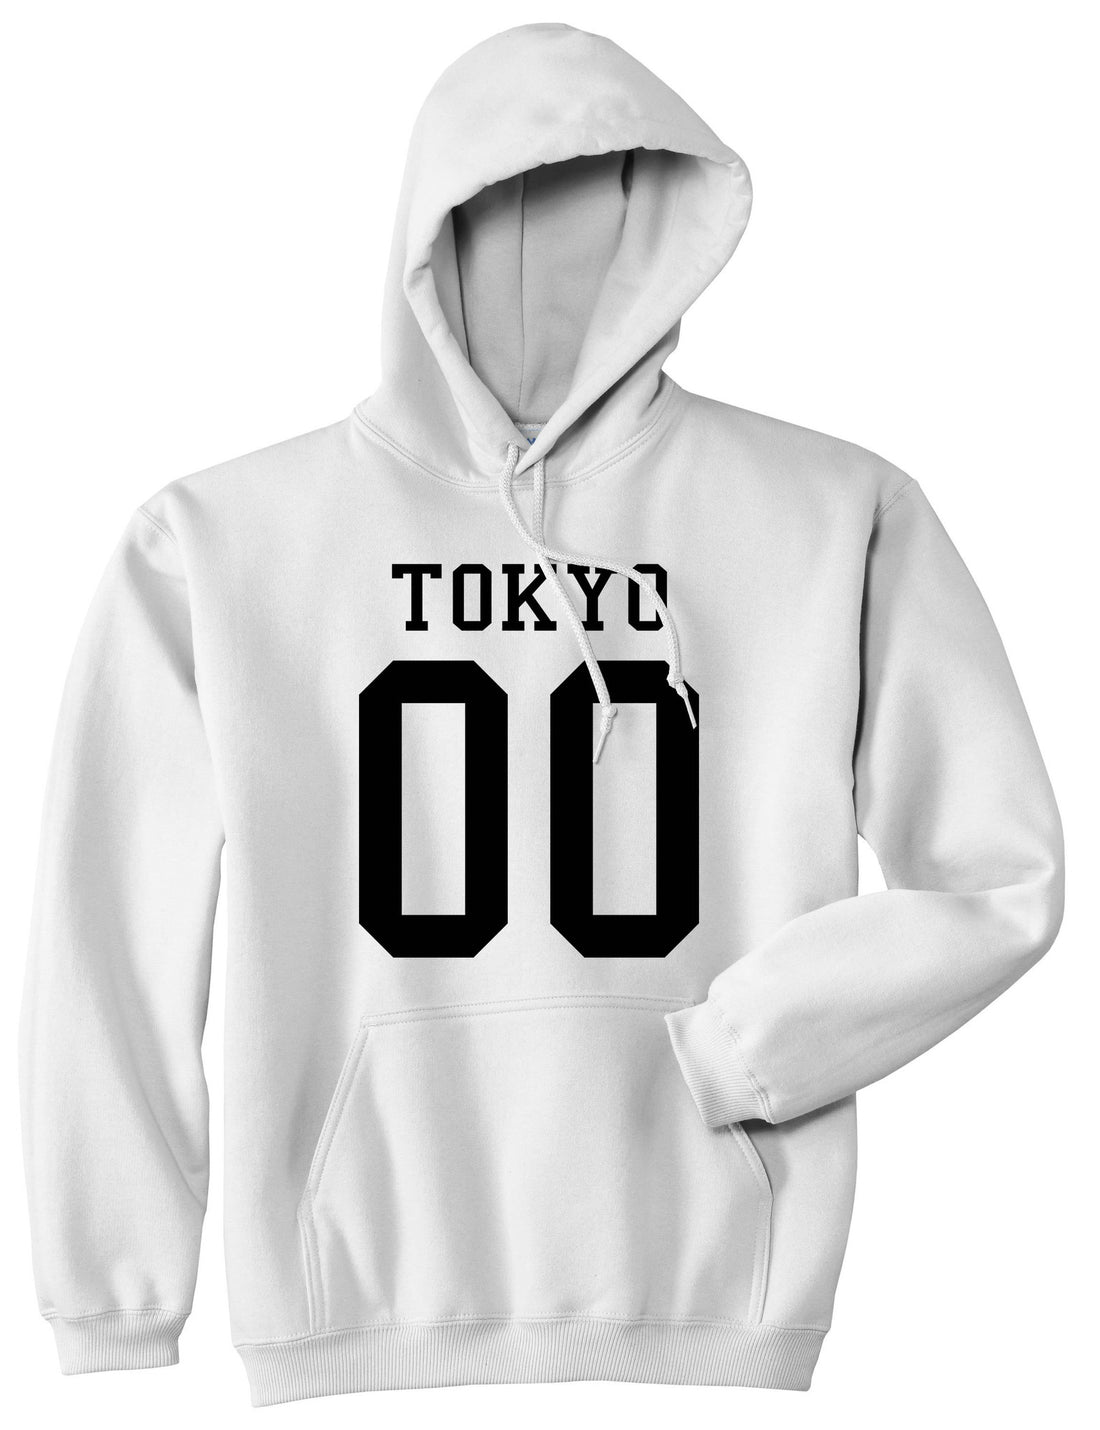 Tokyo Team 00 Jersey Japan Boys Kids Pullover Hoodie Hoody in White By Kings Of NY